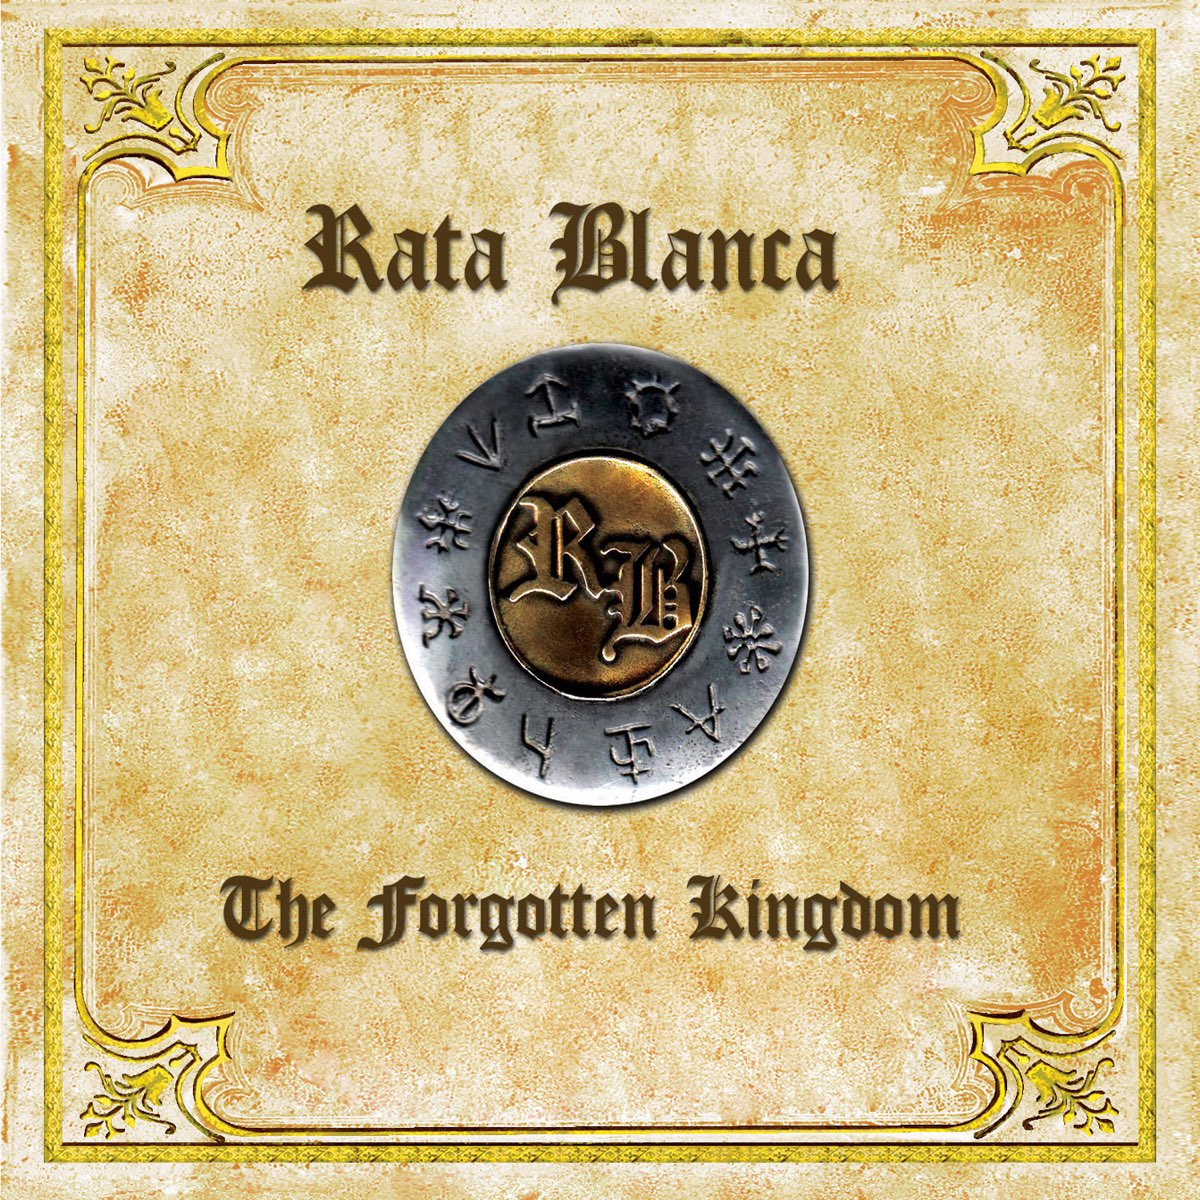 The Forgotten Kingdom” álbum De Rata Blanca En Apple Music 3737